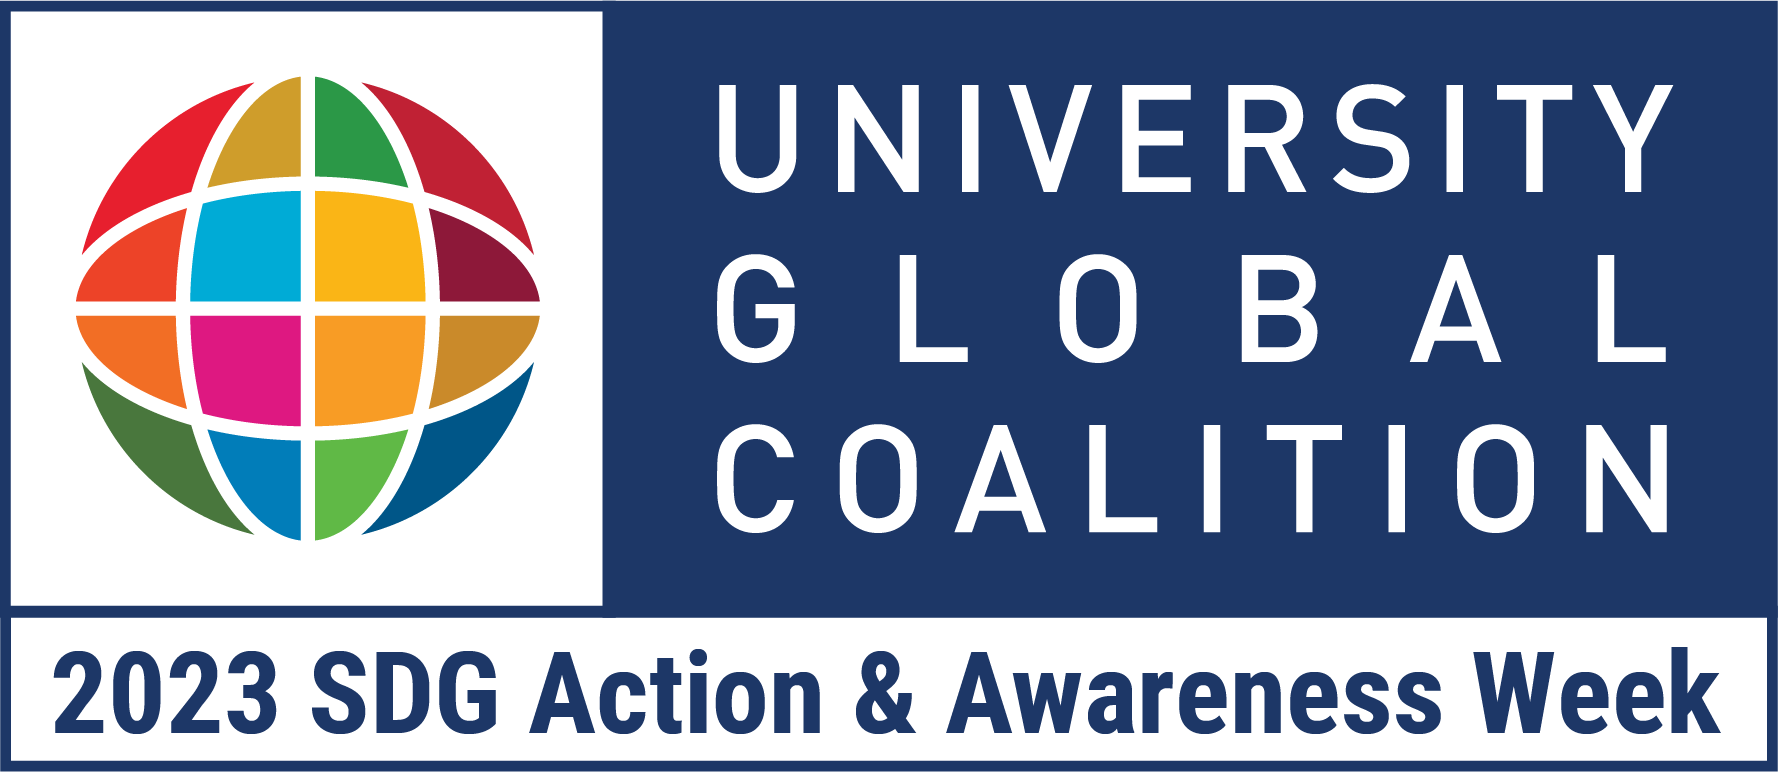 SDG Action and Awareness Week The University Global Coalition